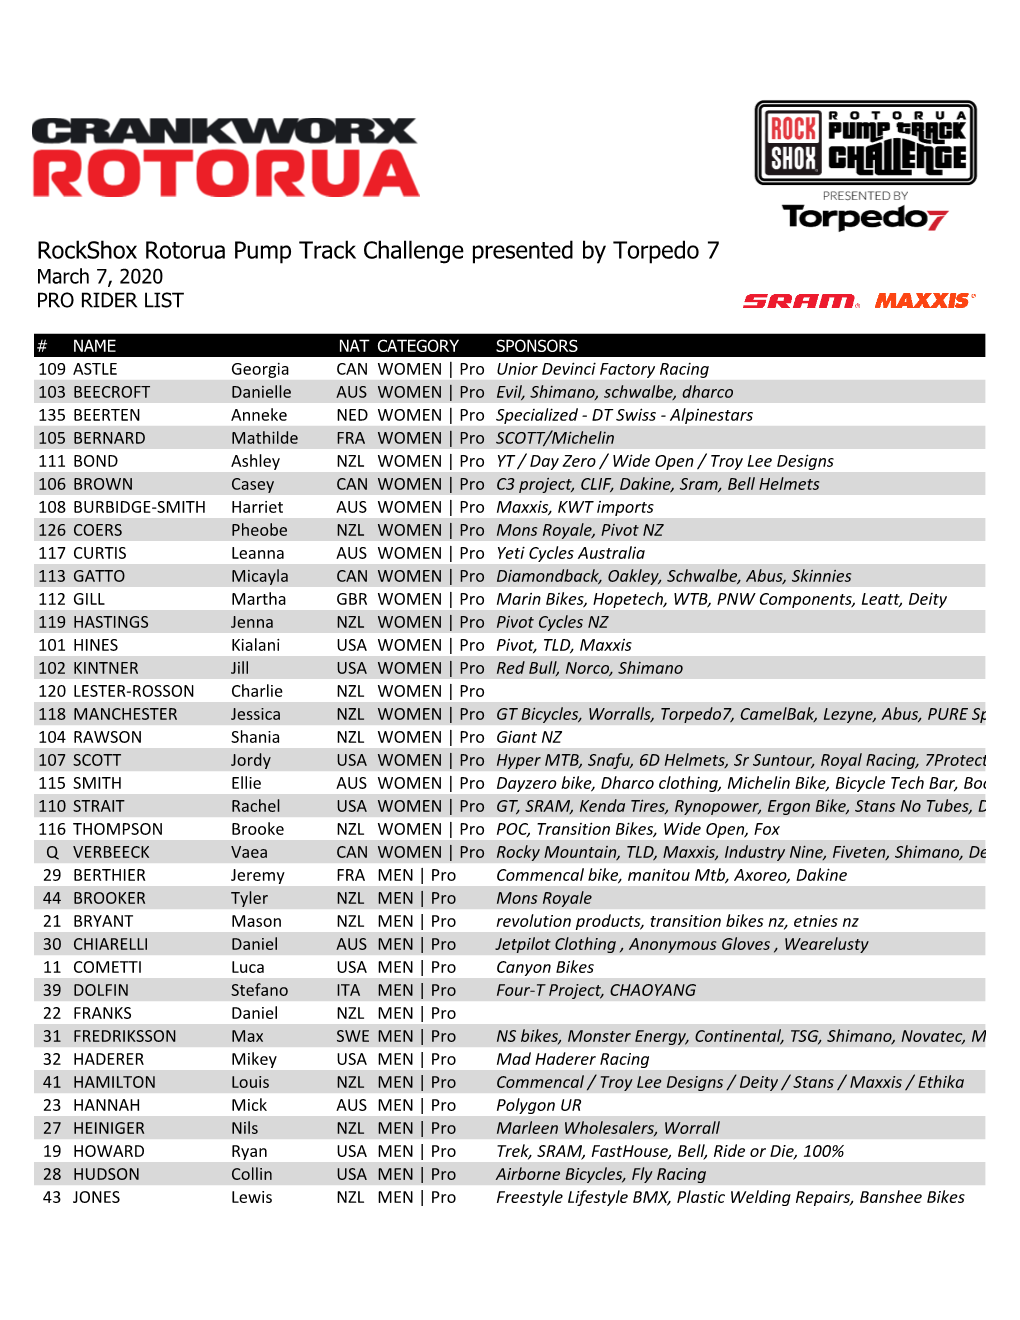 Rockshox Rotorua Pump Track Challenge Presented by Torpedo 7 March 7, 2020 PRO RIDER LIST